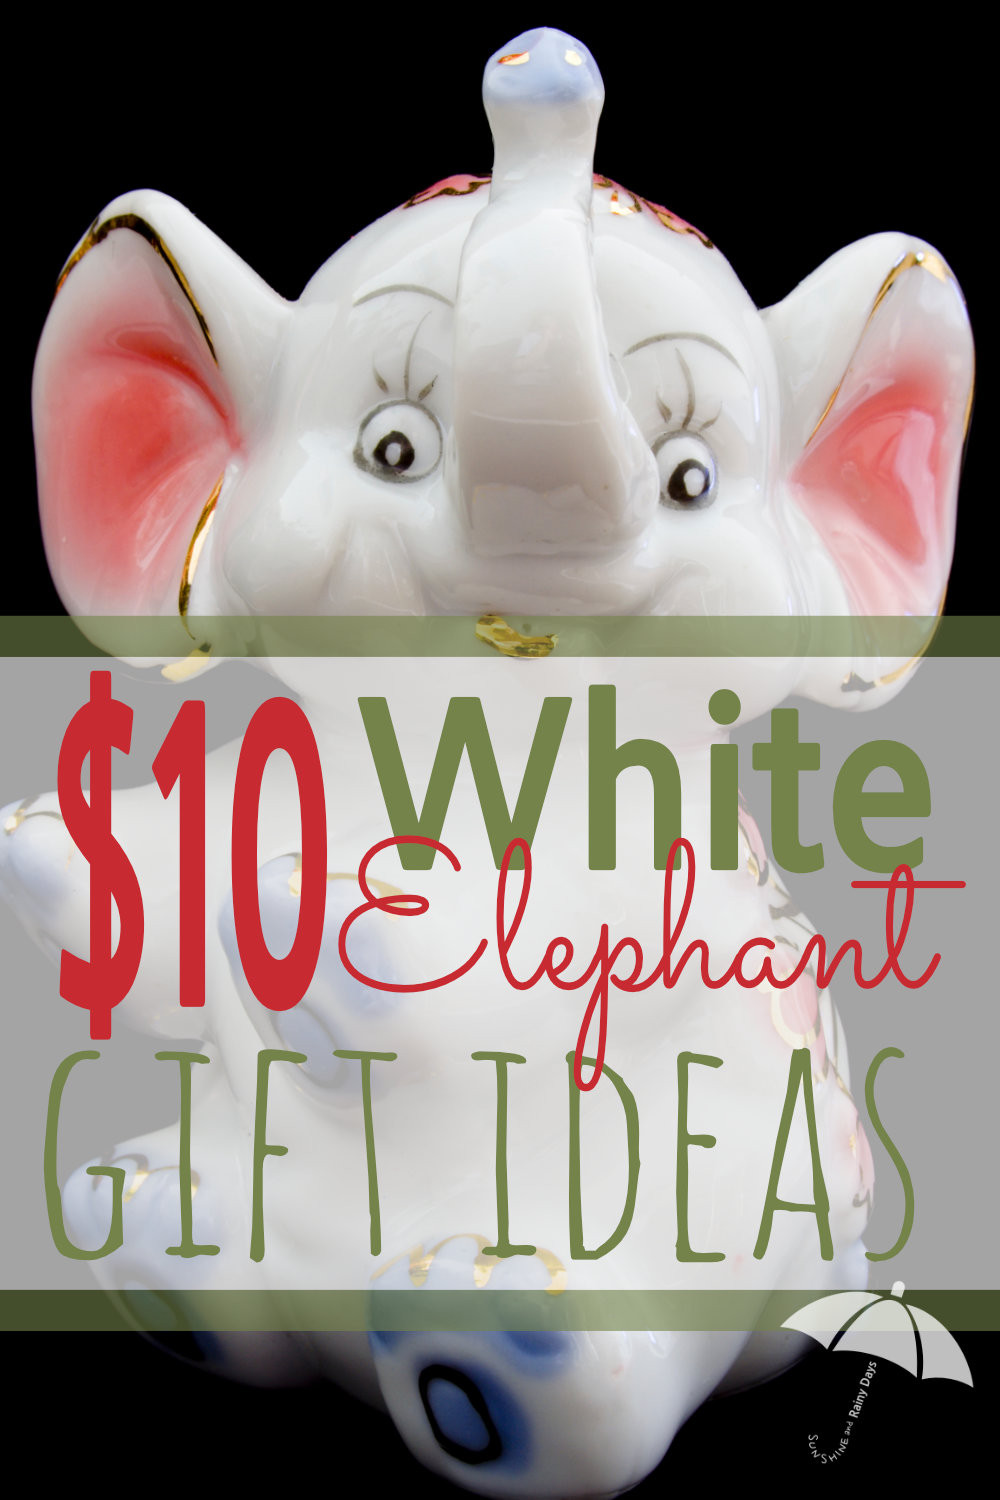 Work Christmas Party Gift Ideas
 $10 White Elephant Gift Exchange Ideas Sunshine and